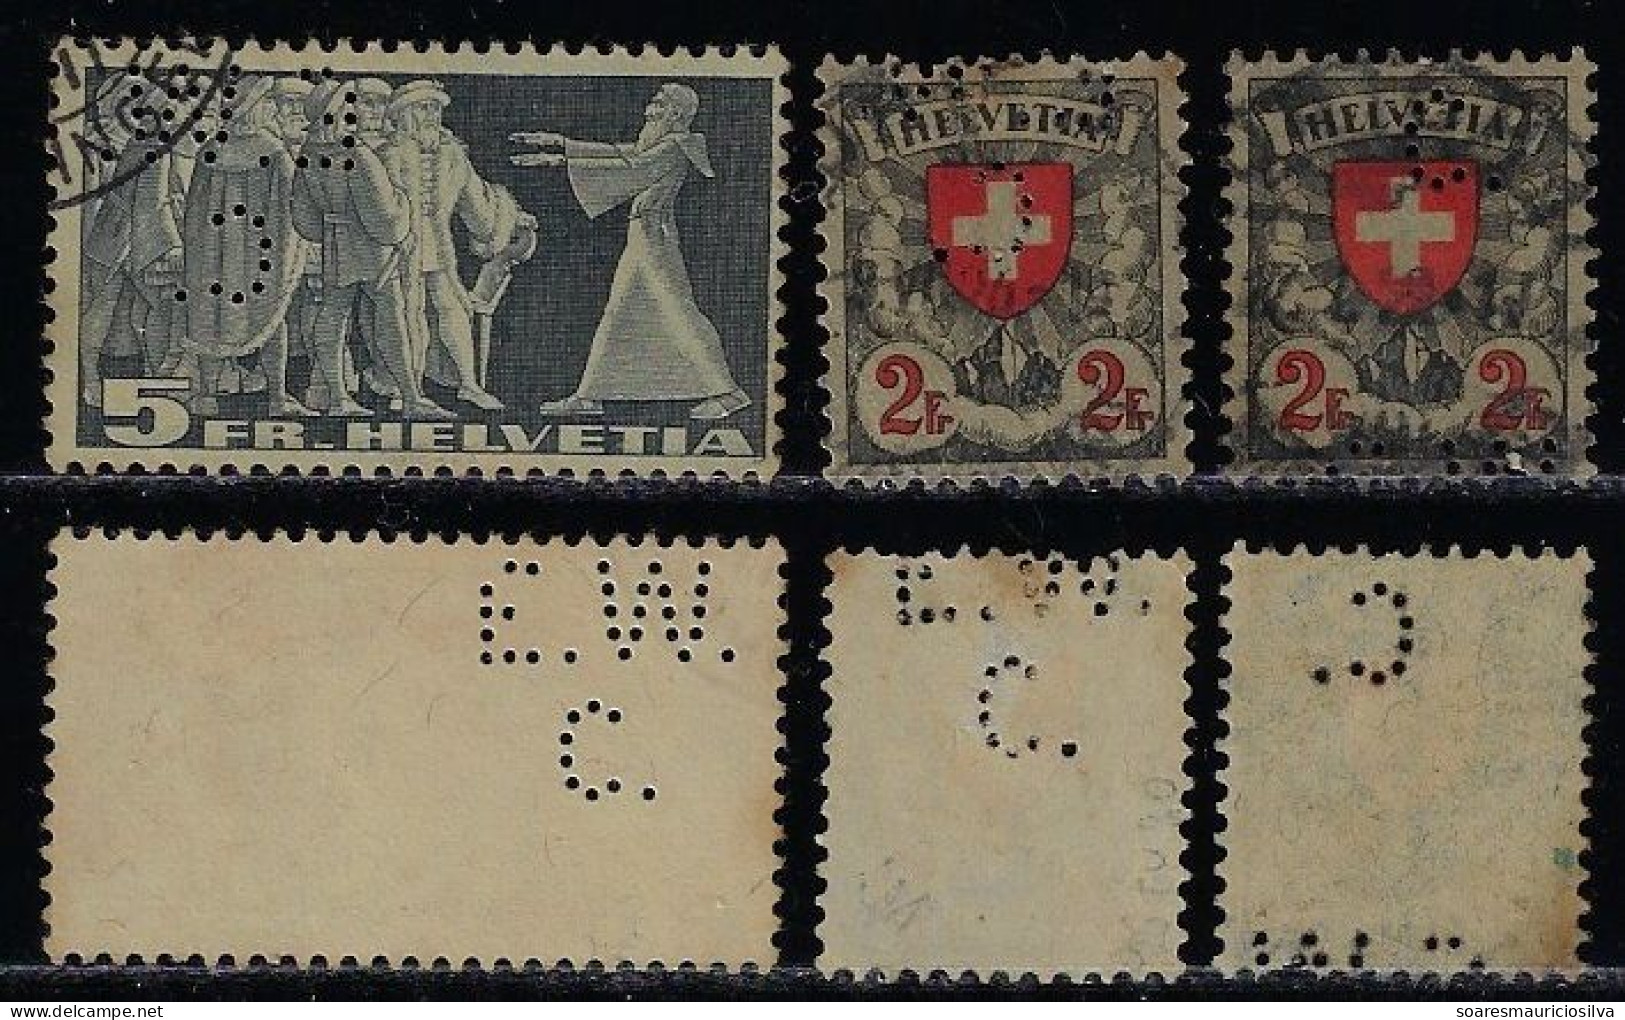 Switzerland 1894/1940 3 Stamp With Perfin E.W./C. By Escher-Wyss & Co Machine Factory In Zurich Lochung Perfore - Perfins